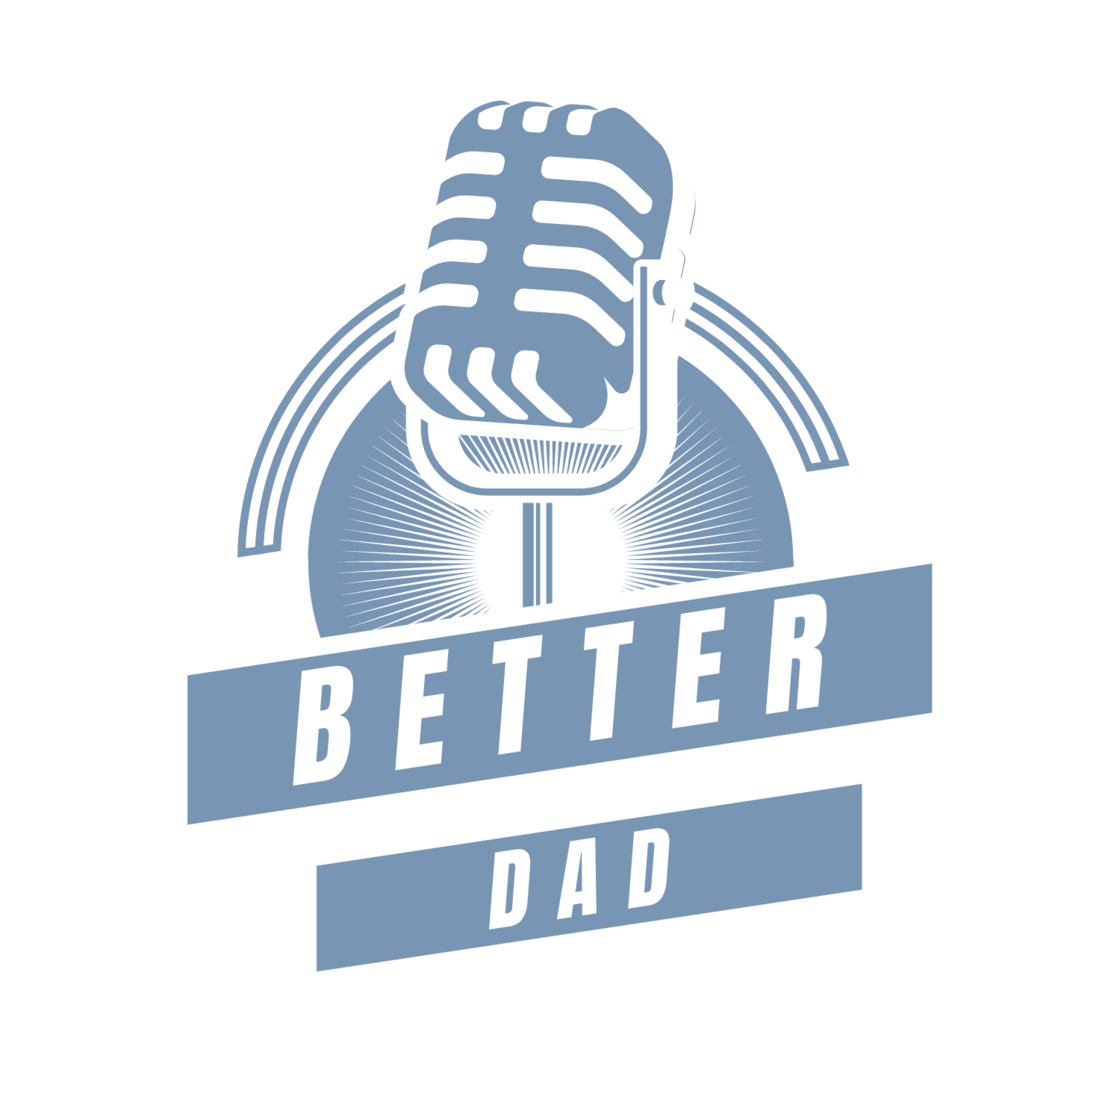 Better Dad logo